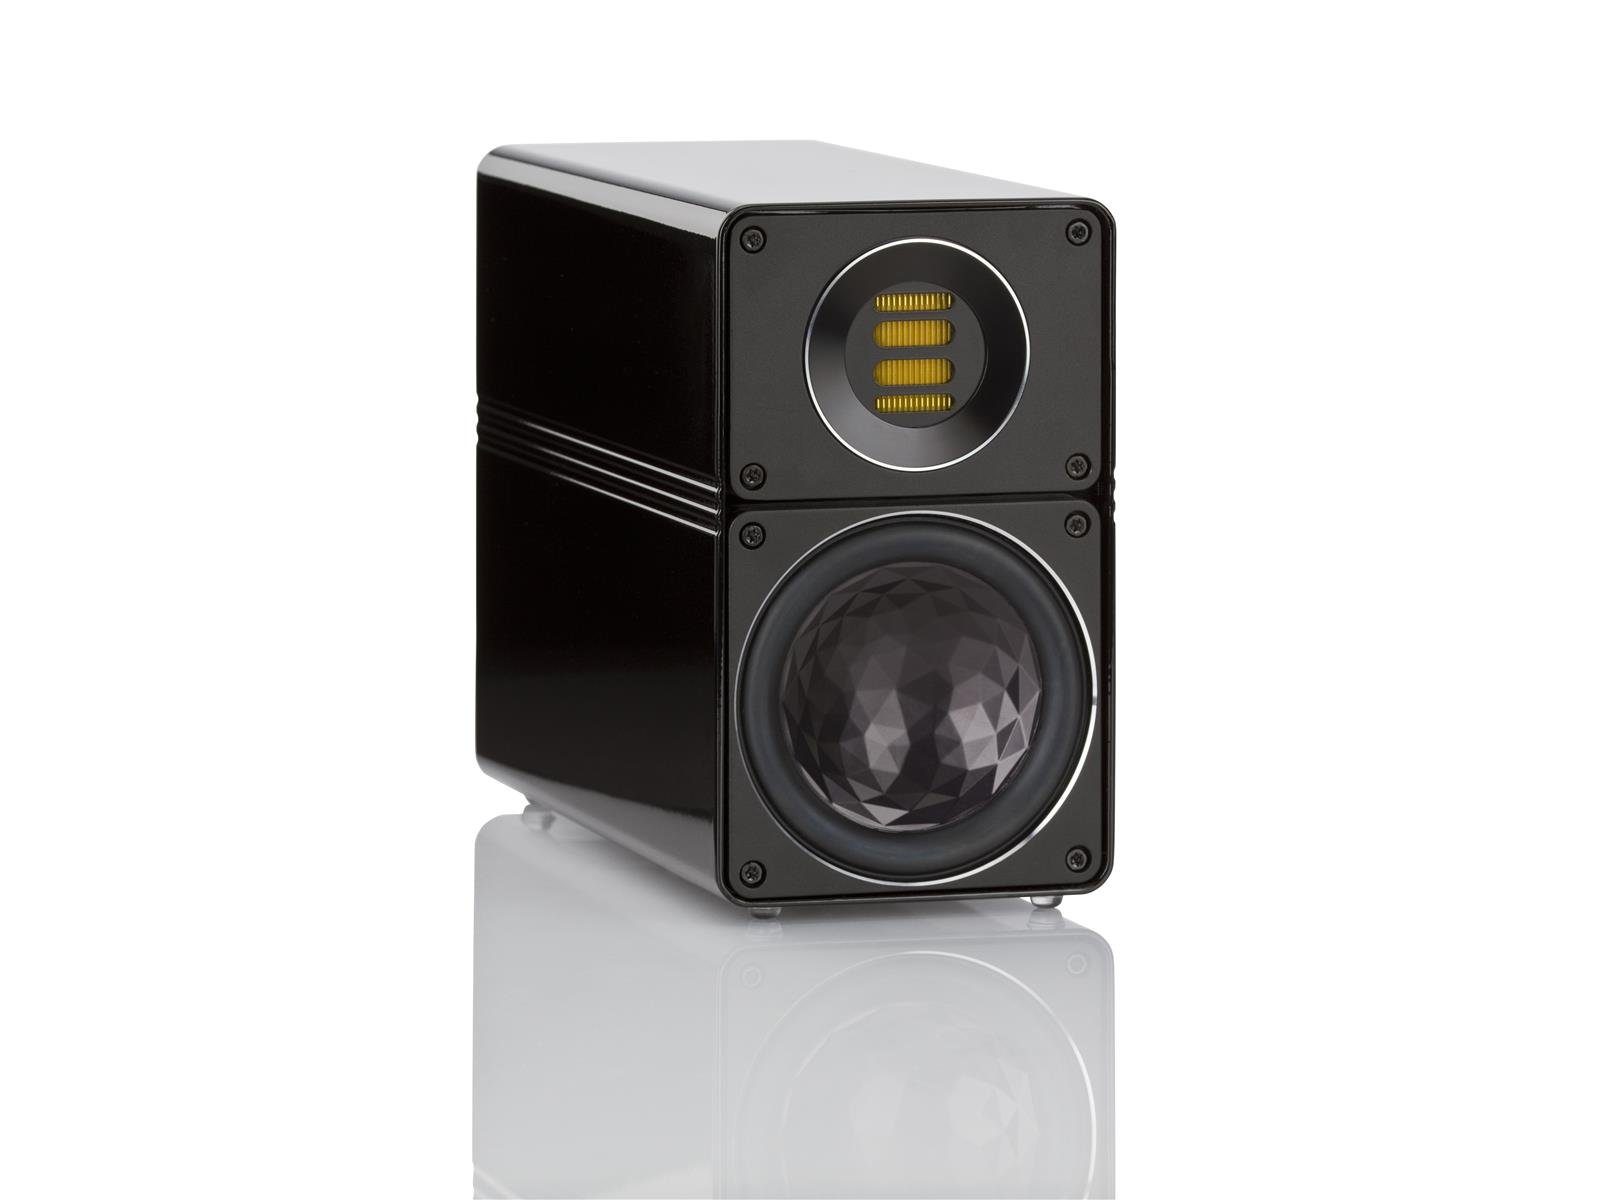 BS ELAC (Paarpreis) ELAC Regal-Lautsprecher 312 Regallautsprecher schwarz